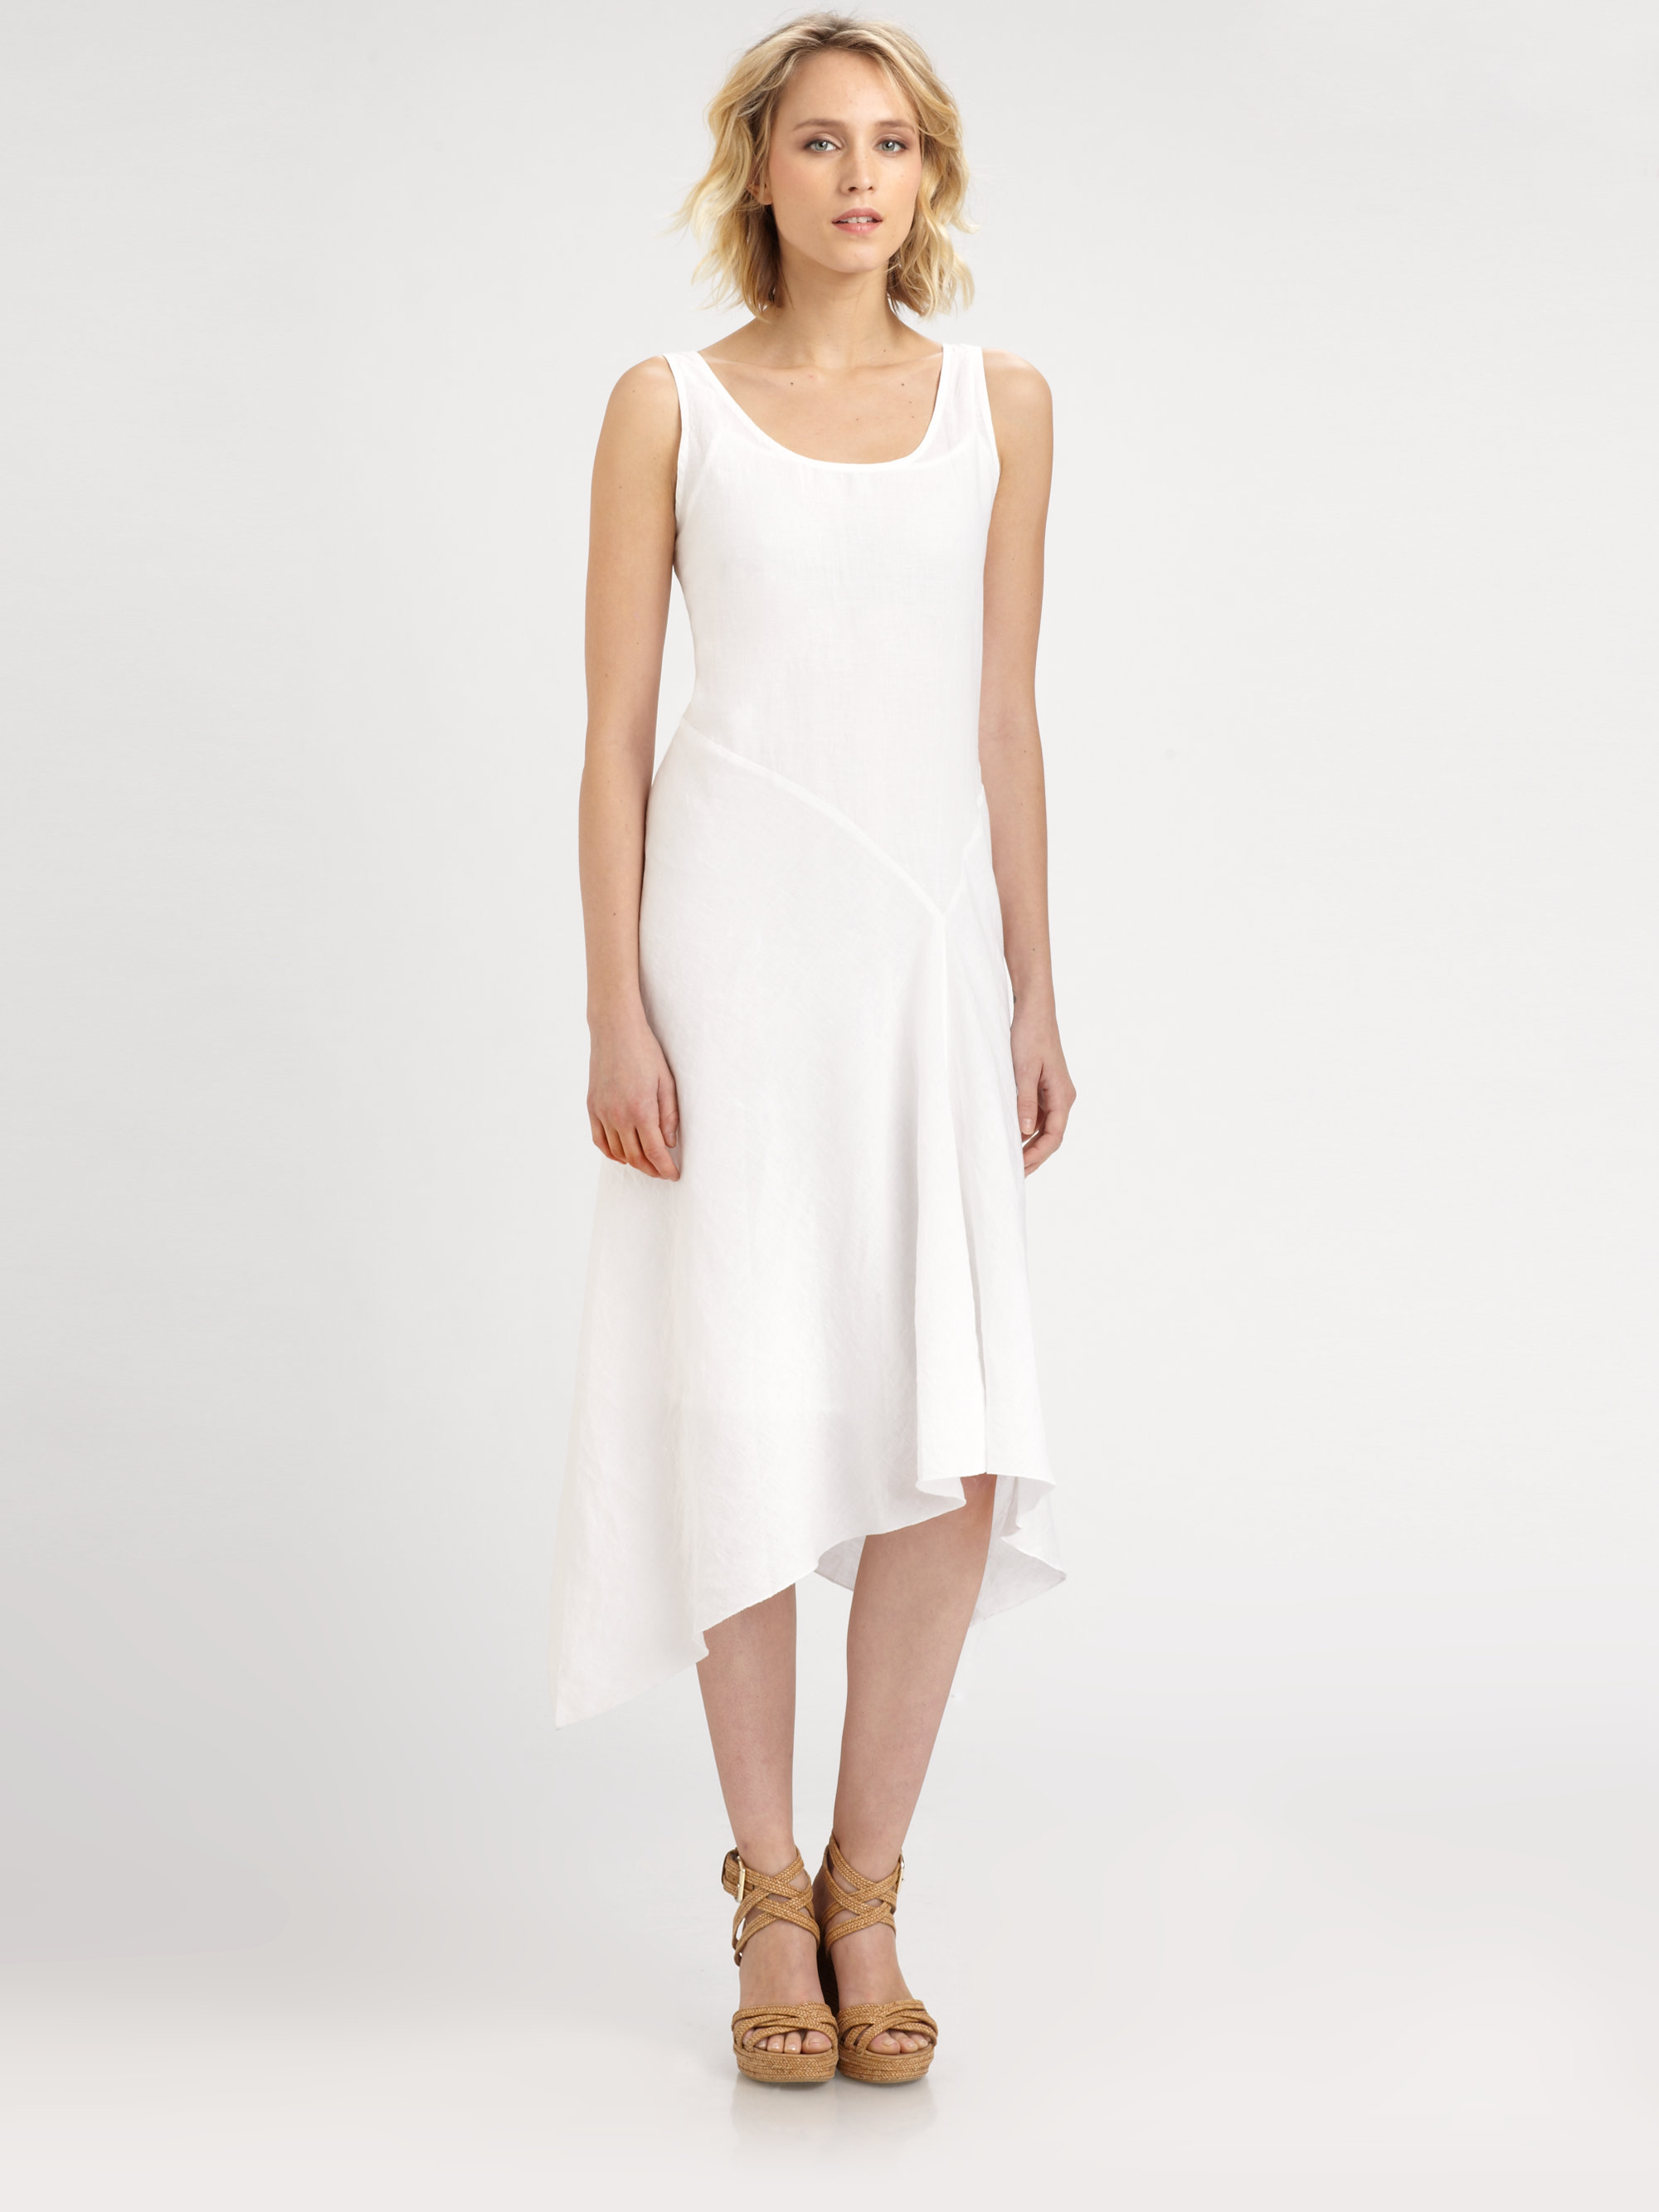 Lyst - Eileen Fisher Irish Linen Sleeveless Dress in White